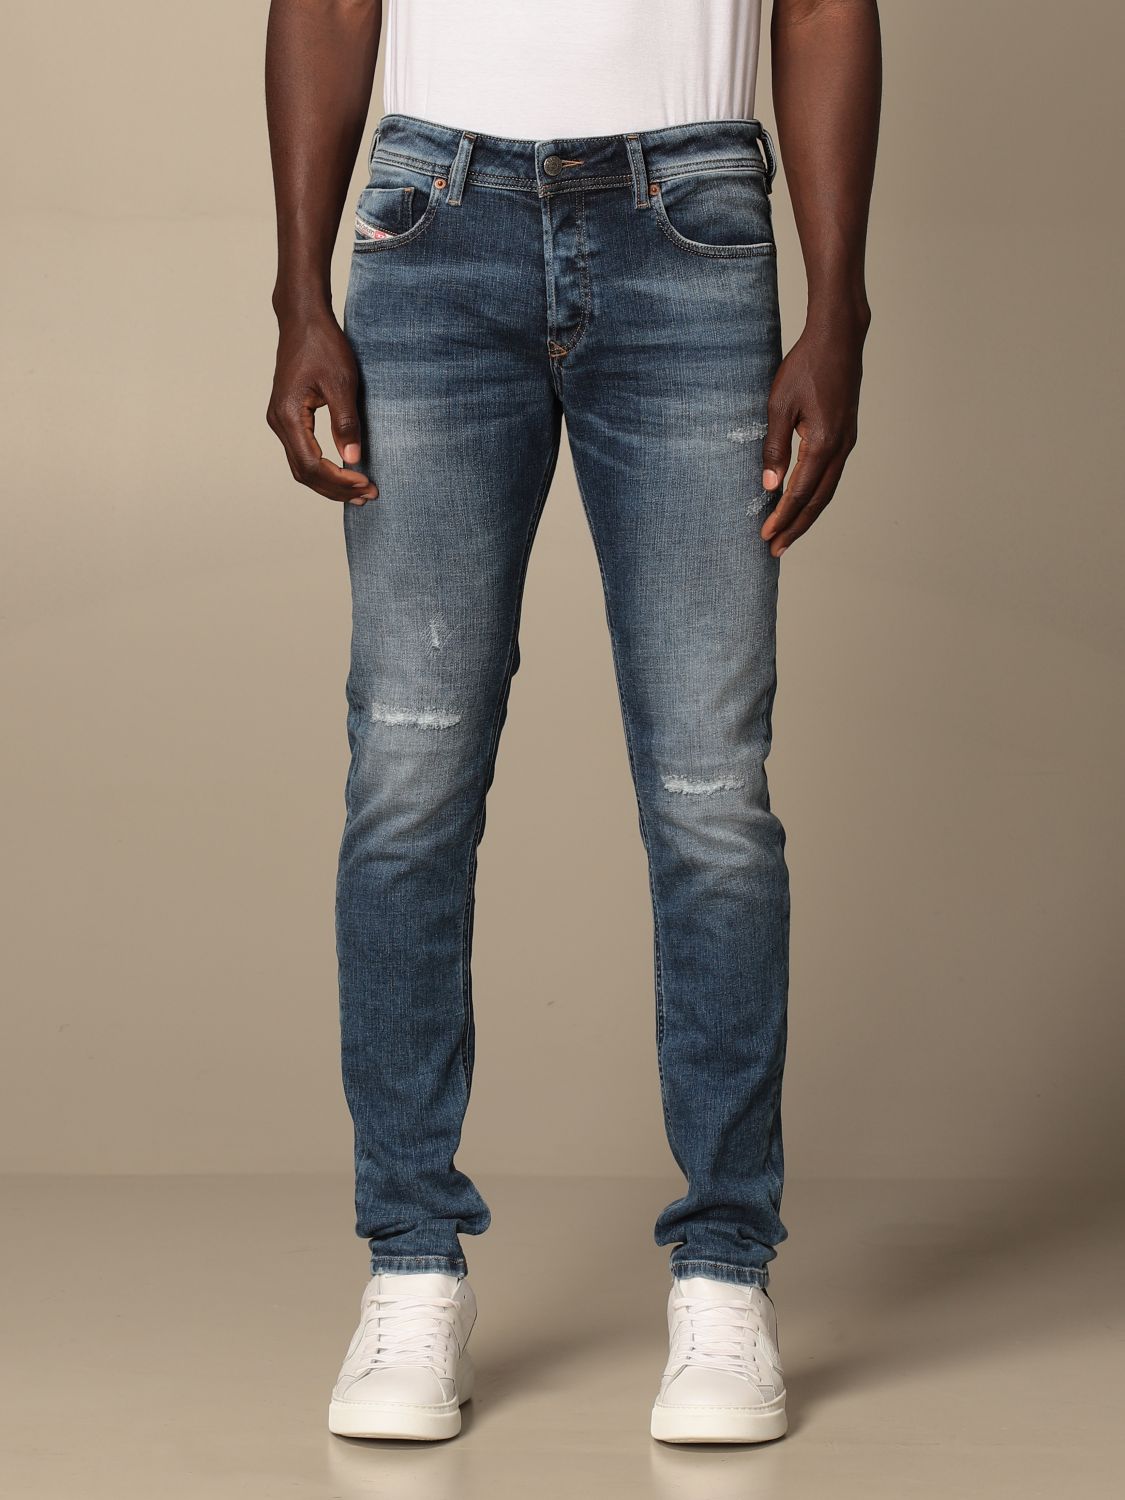 DIESEL: Sleenker-x 5-pocket skinny stretch jeans - Denim | jeans 00SWJF 009PN online on GIGLIO.COM